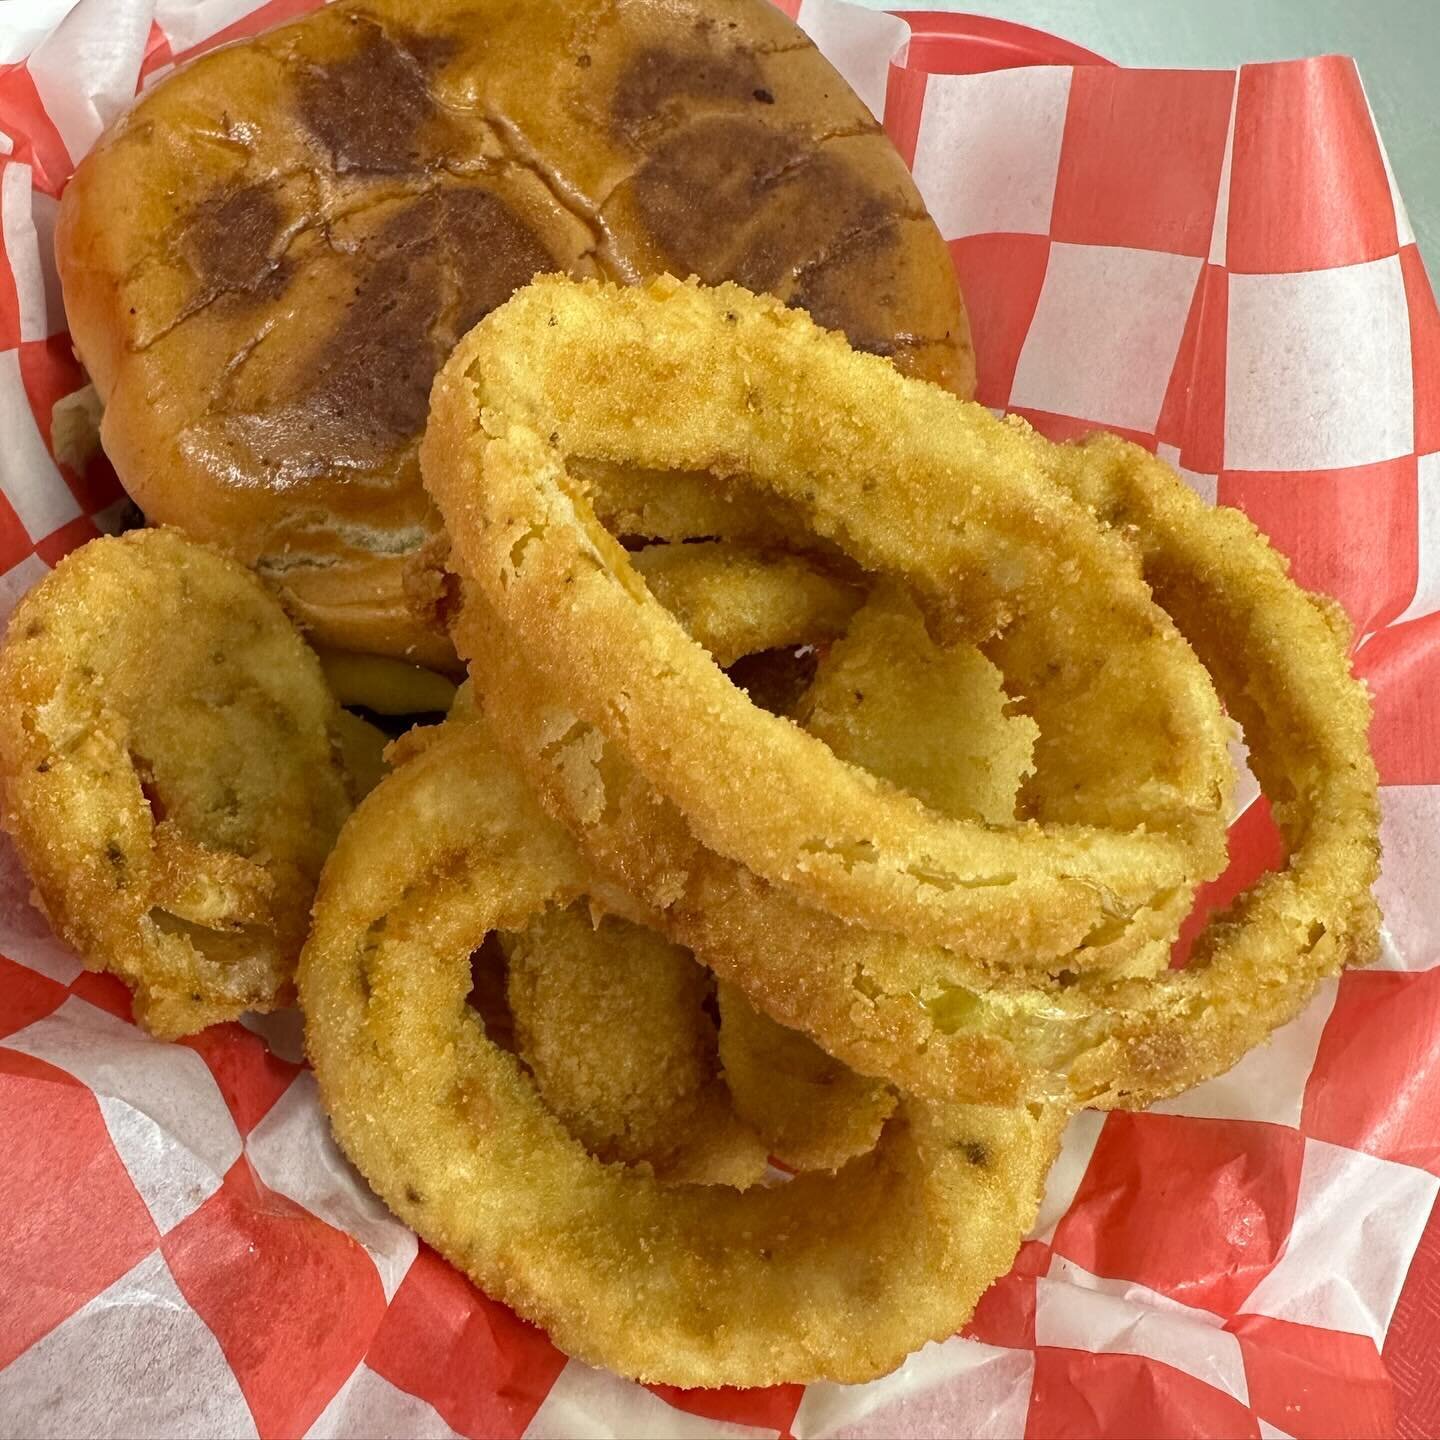 Homemade onion rings, breaded at each location daily! 😋 #vicksfamoushamburgers #homeoftheultimateburger #corpuschristi